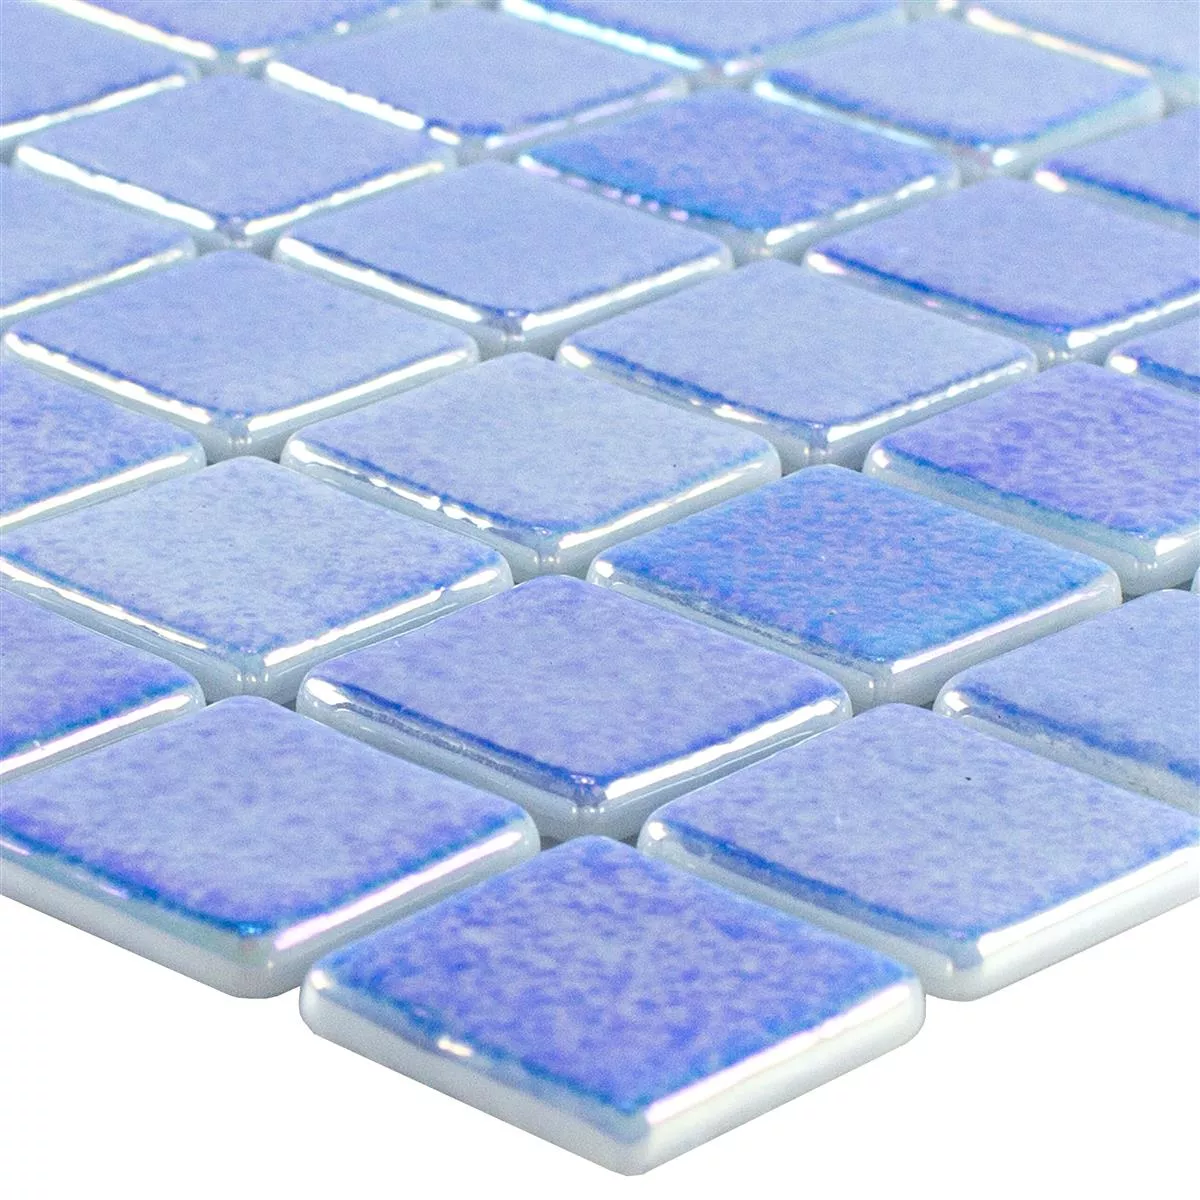 Muster von Glas Schwimmbad Pool Mosaik McNeal Blau 25